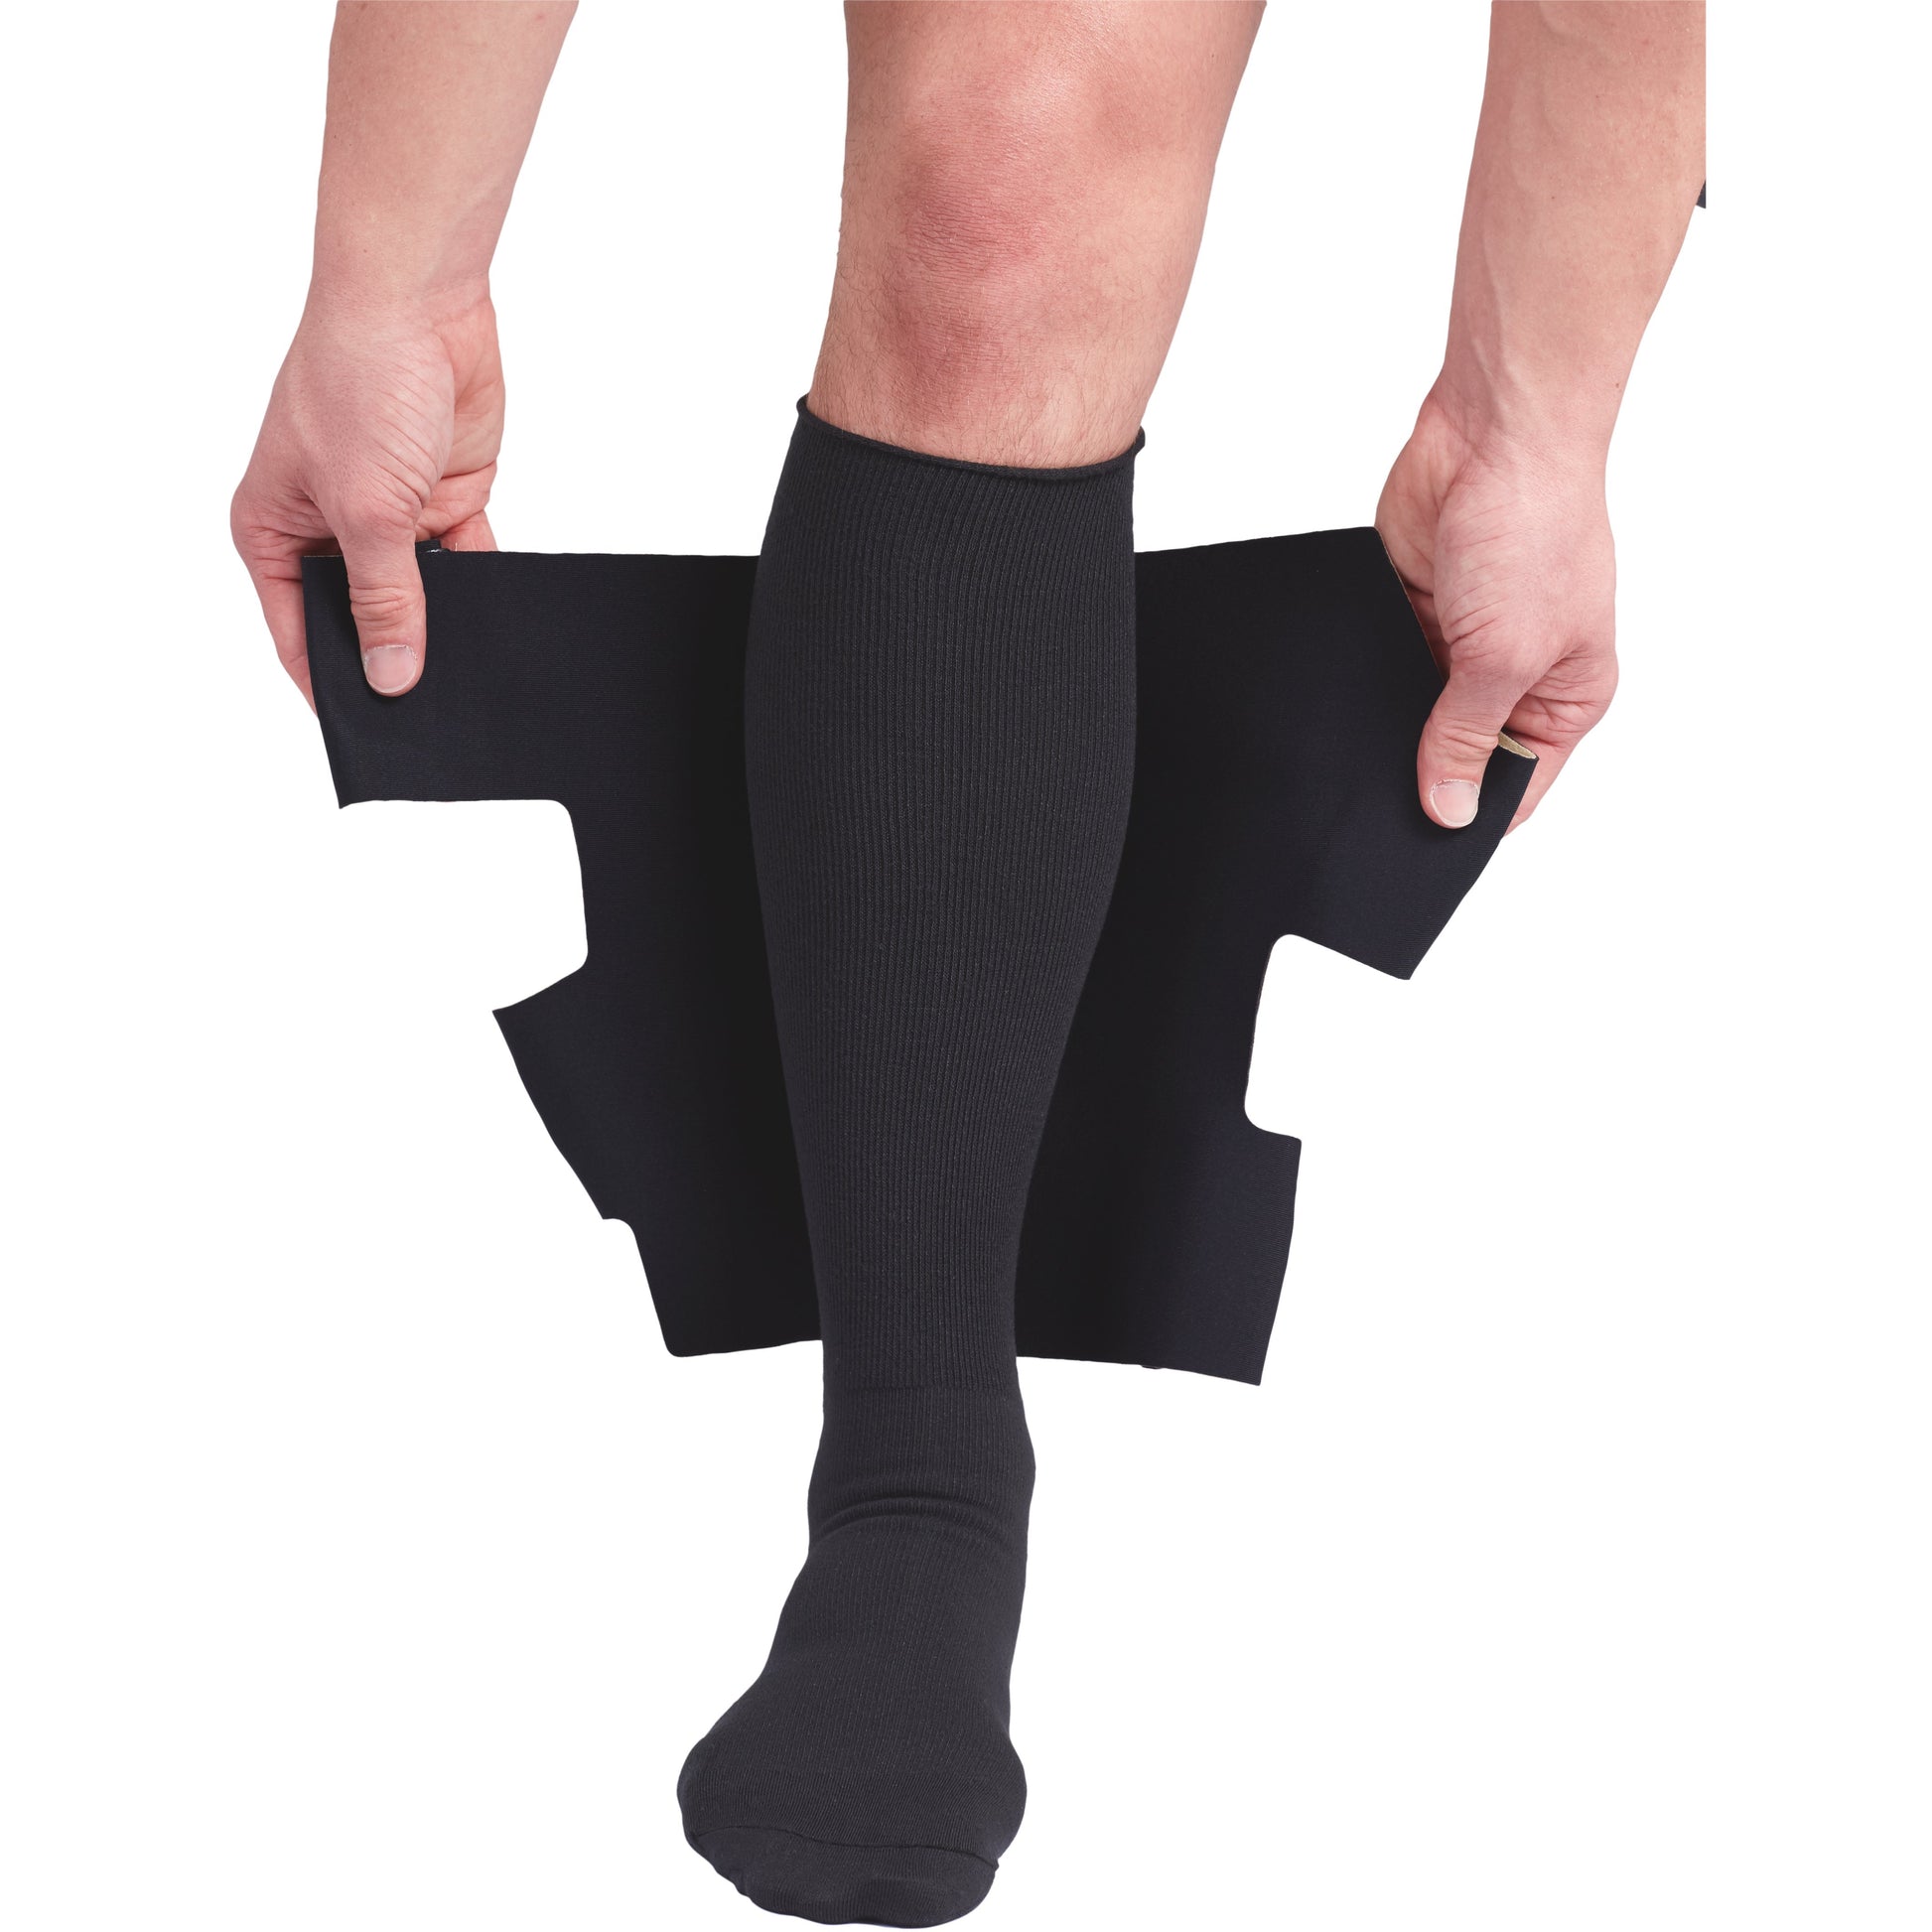 circaid® juxtafit® lower leg - Standard sizes – measuring for